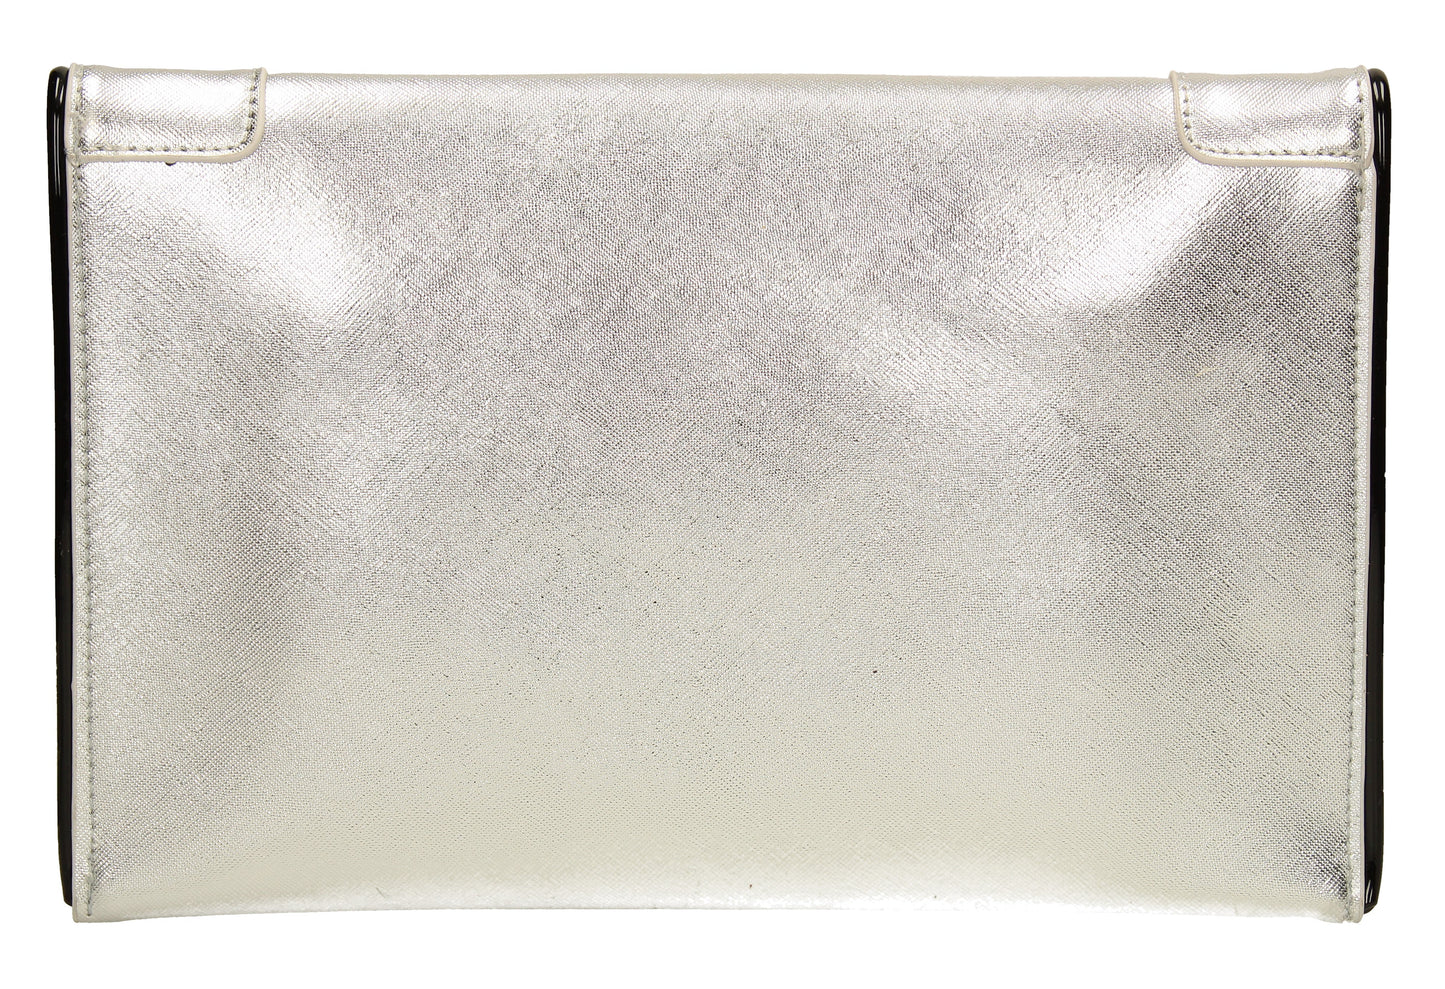 SWANKYSWANS Merlin Clutch Bag Silver Cute Cheap Clutch Bag For Weddings School and Work